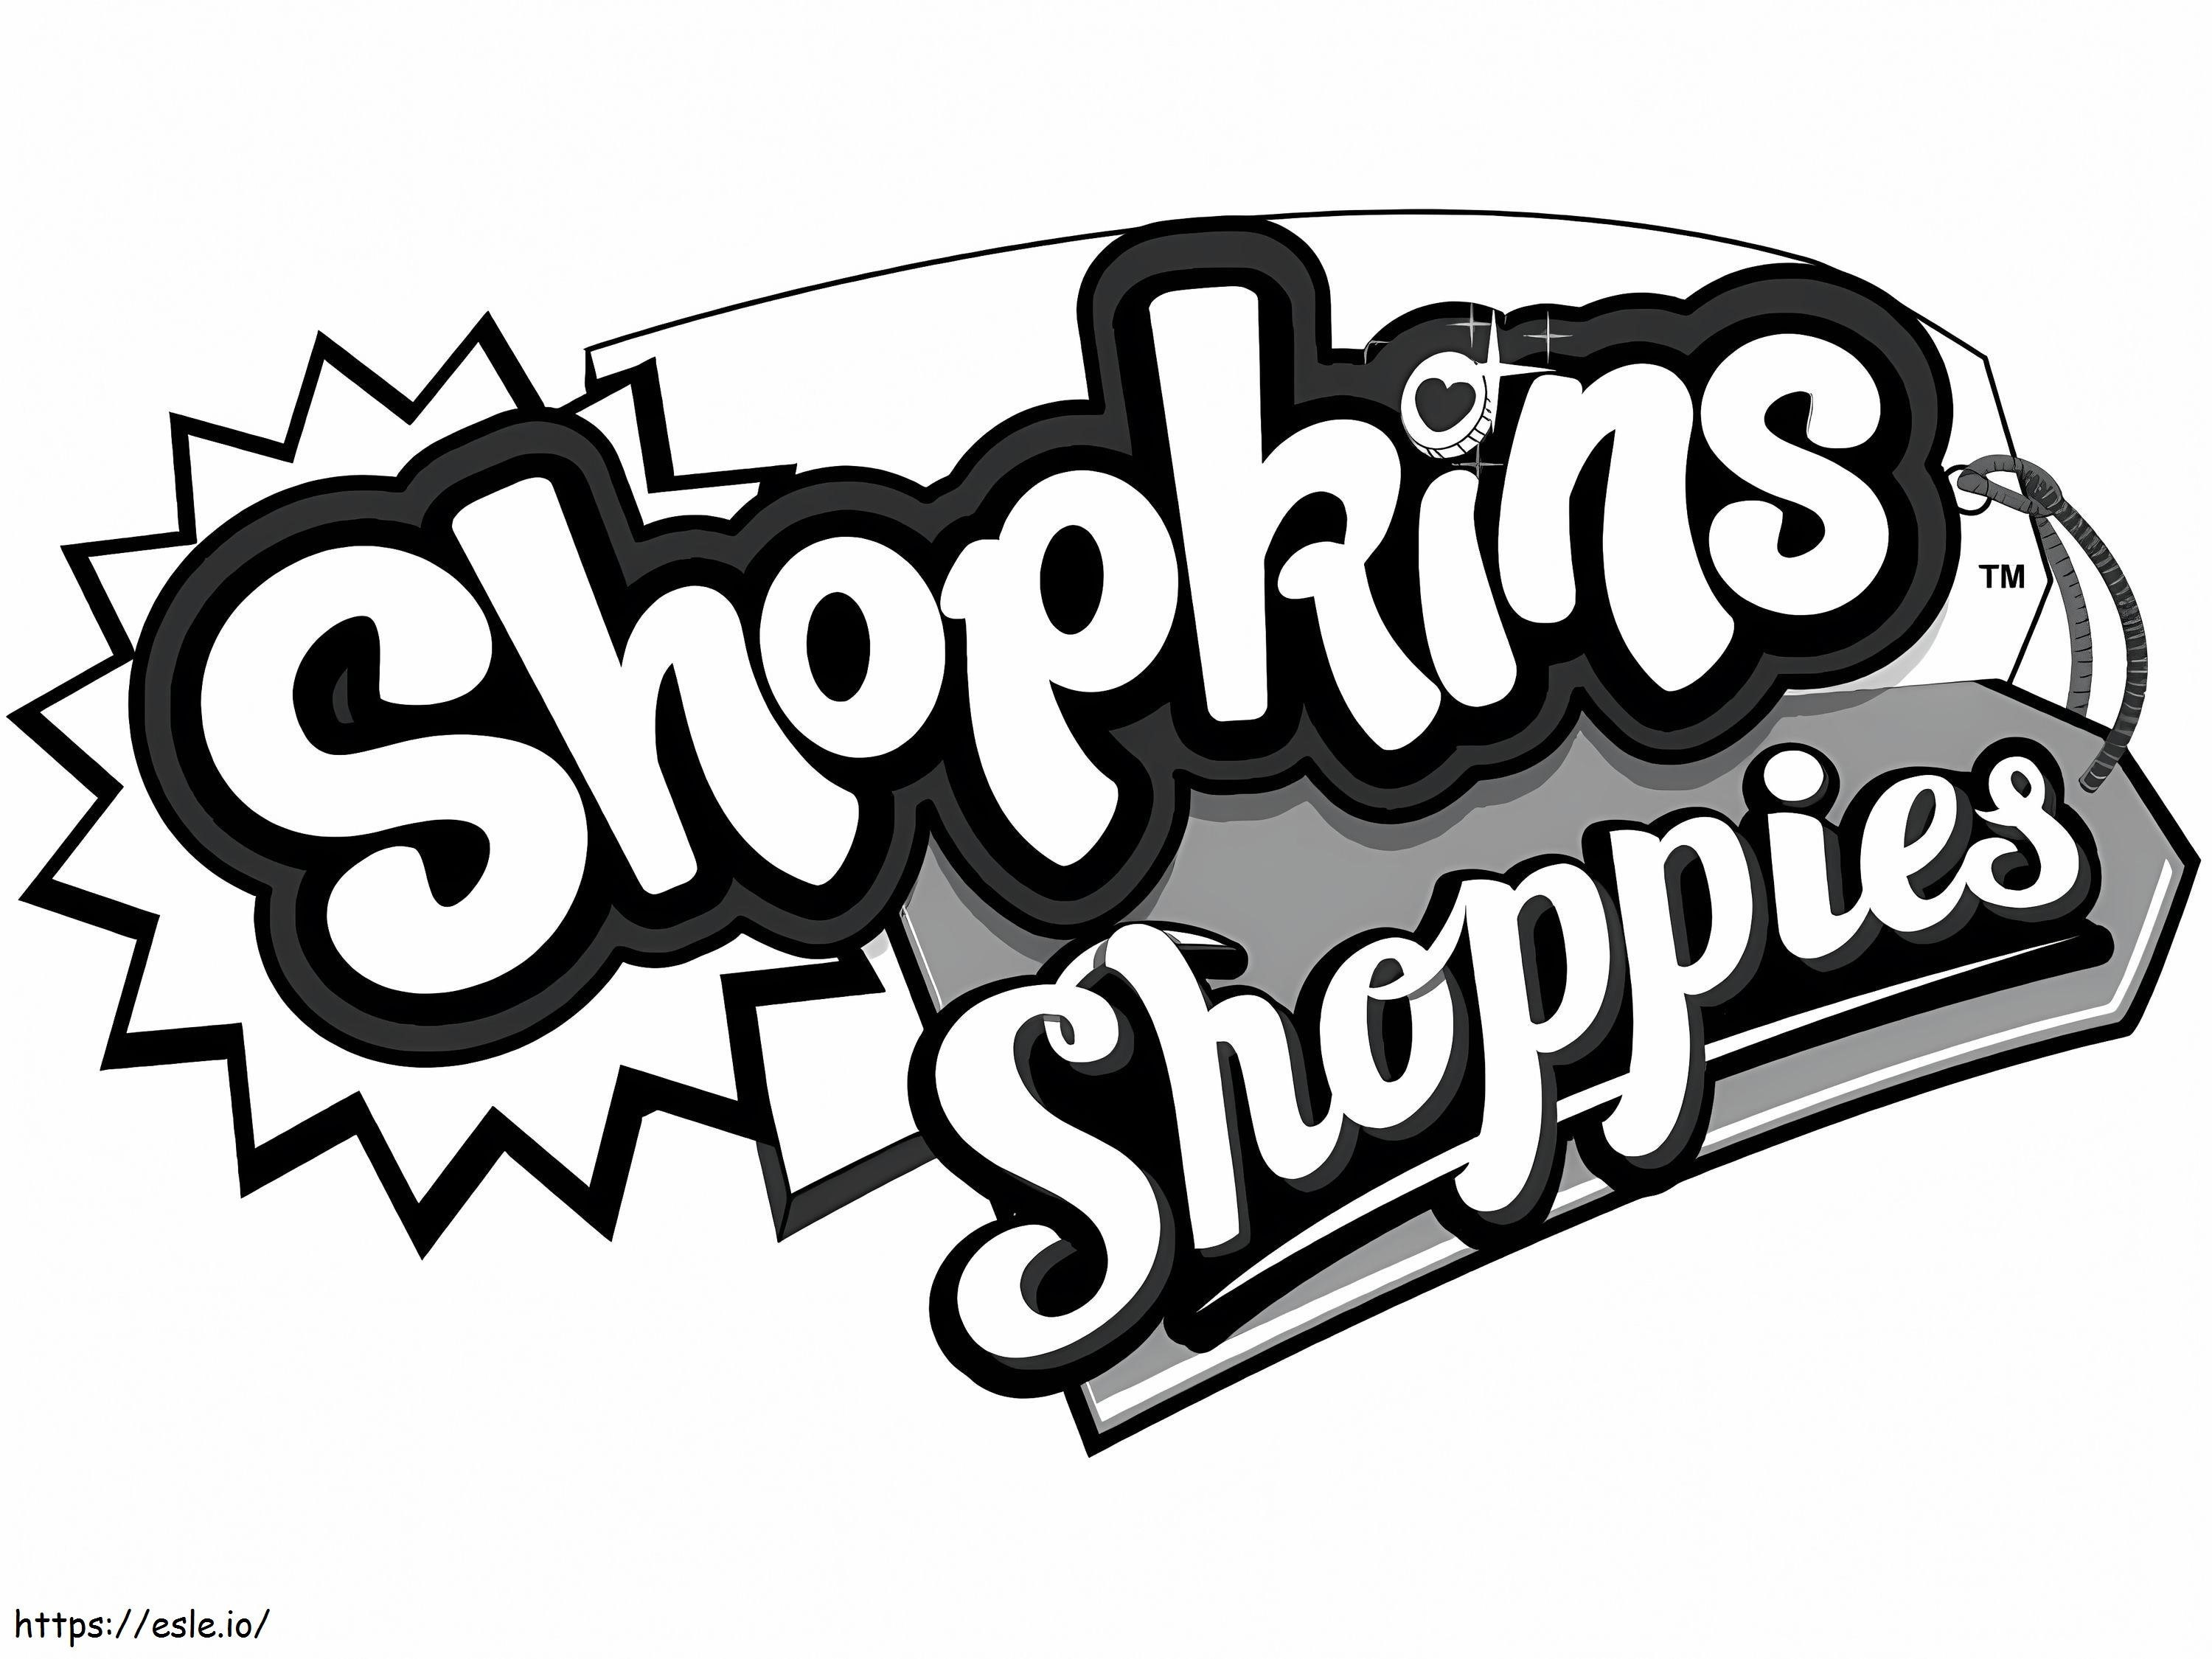 Logo Shopkins Shoppies Gambar Mewarnai